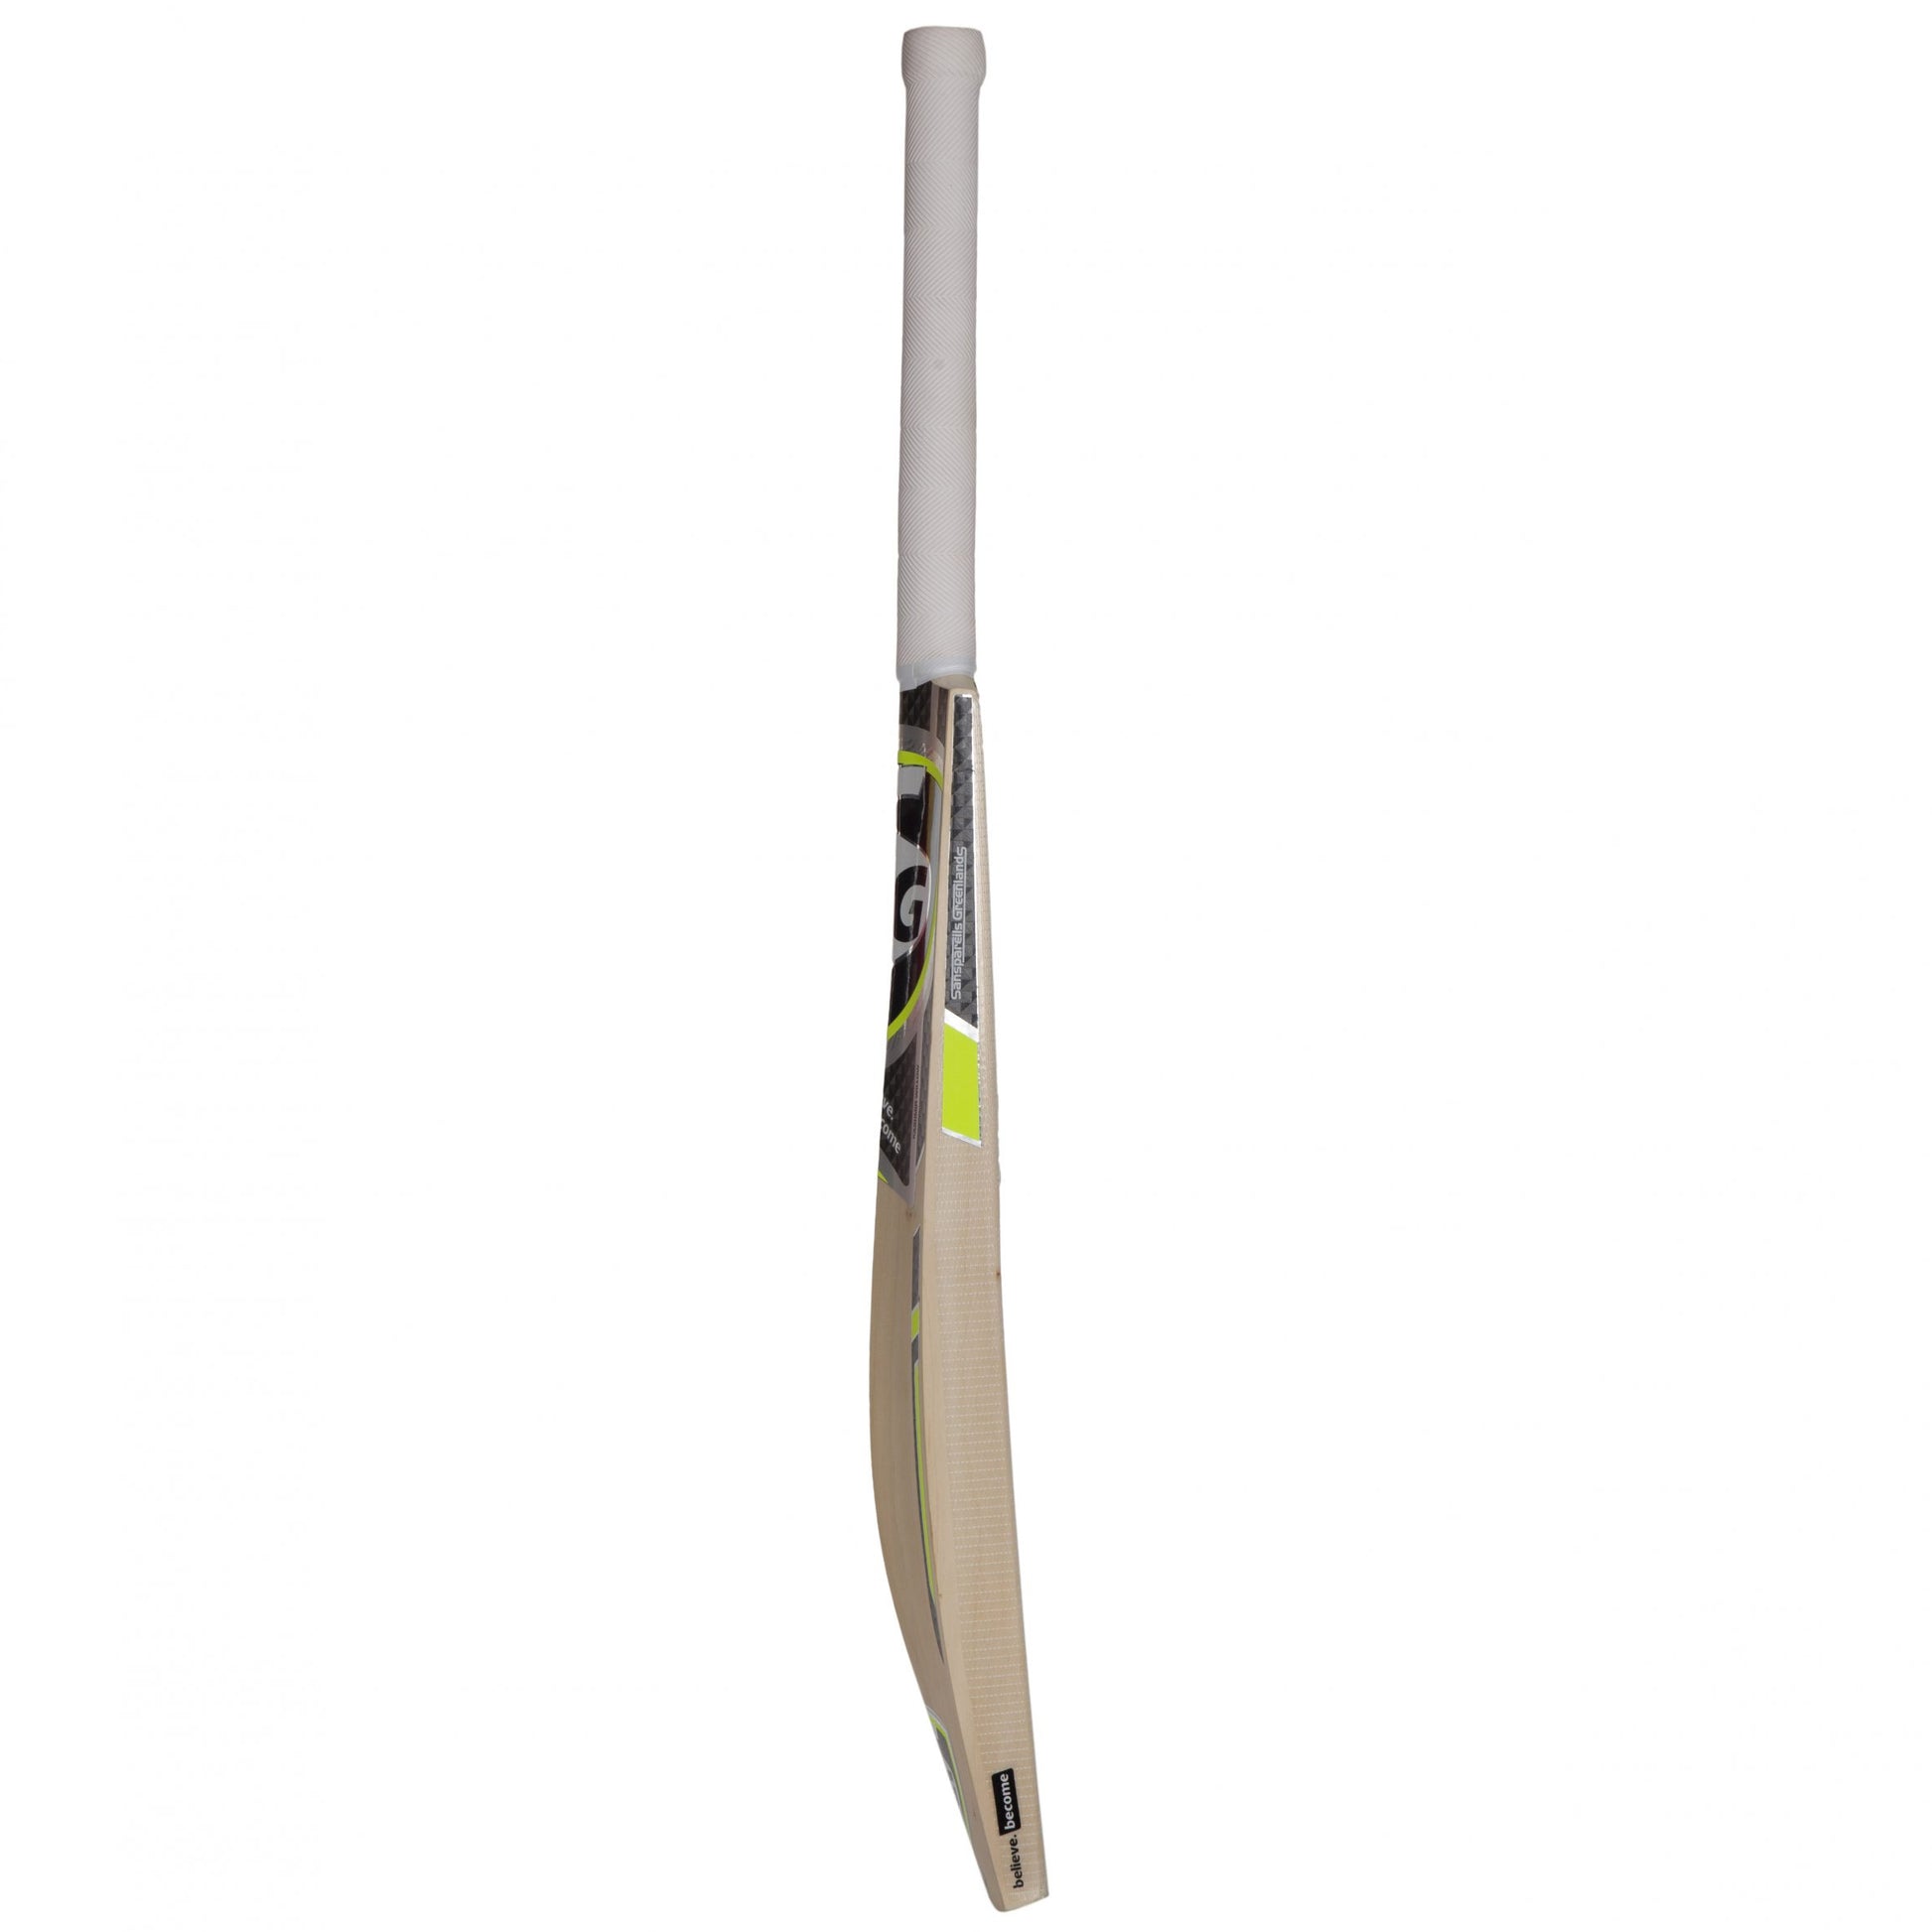 SG Phoenix Extreme Kashmir Willow Cricket Bat - Best Price online Prokicksports.com